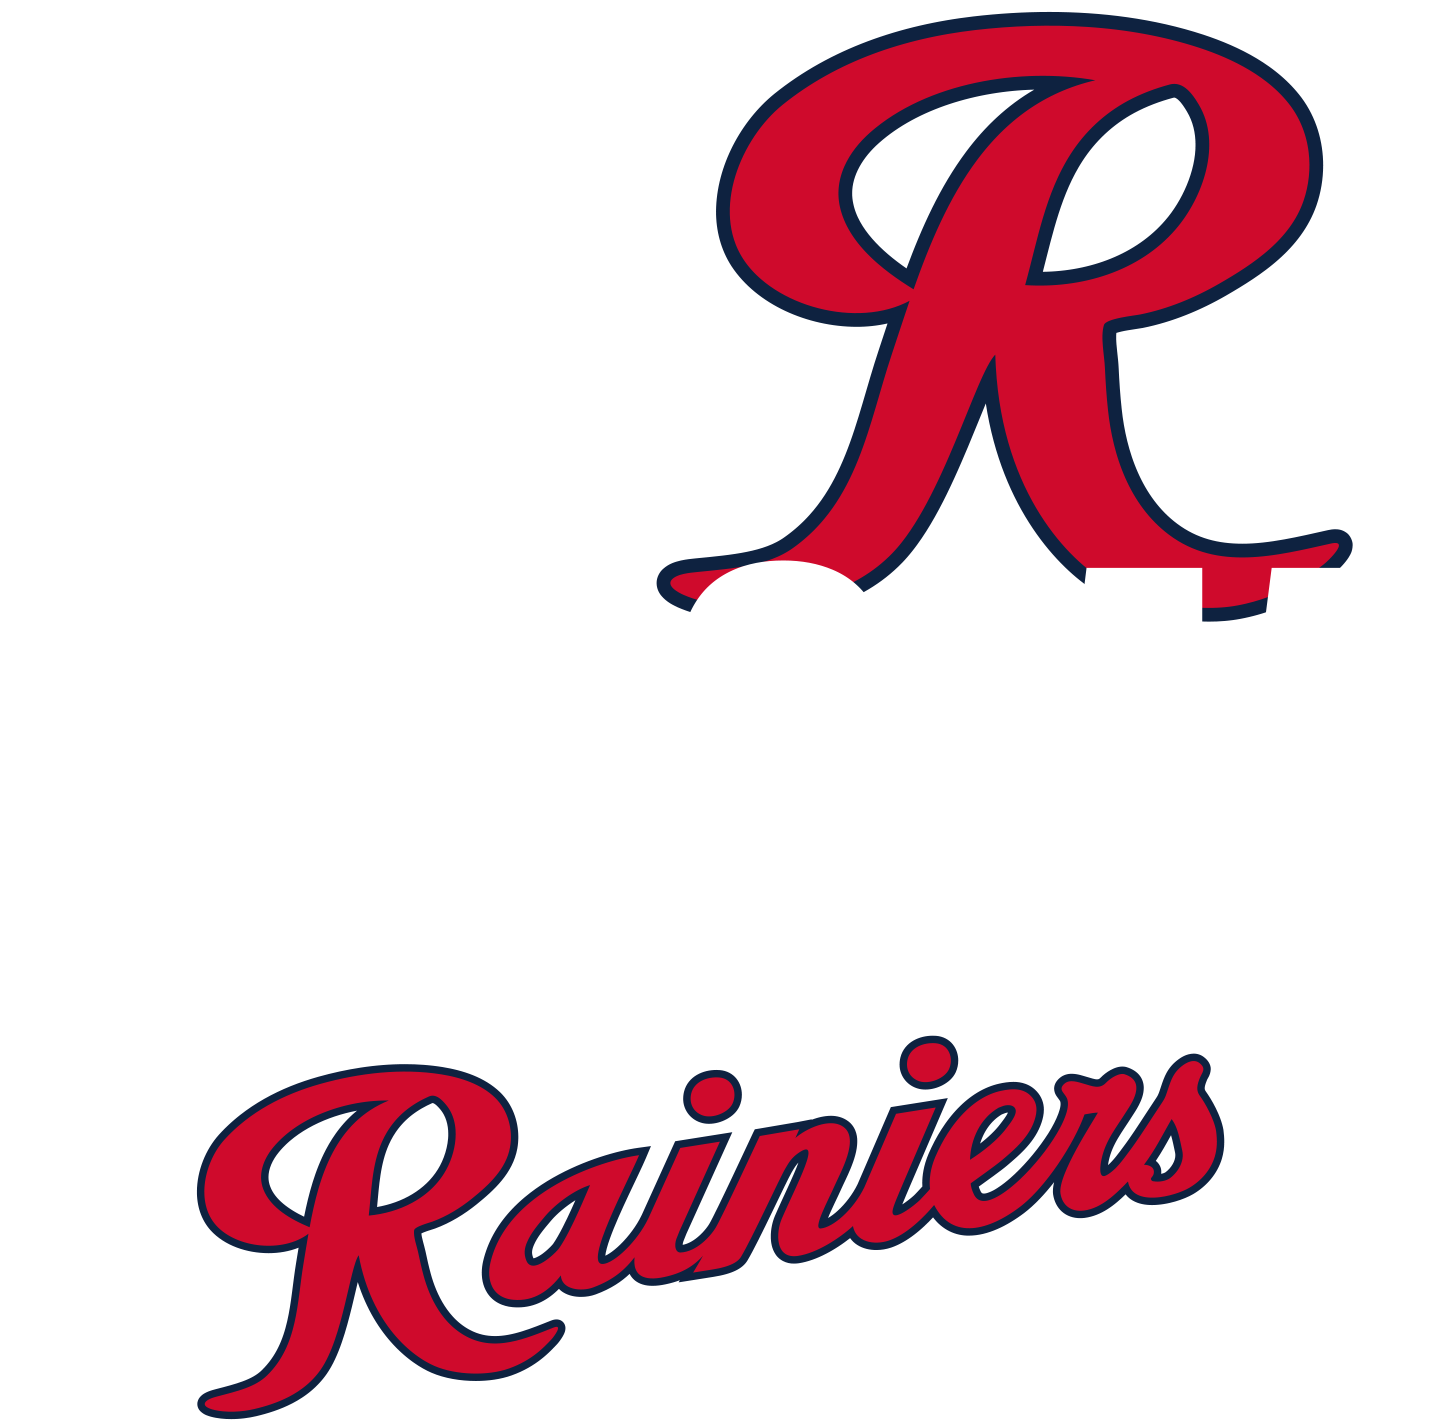 Tacoma logo. Toys r us logo. R logo PNG. Passion r logo PNG. R скопировать